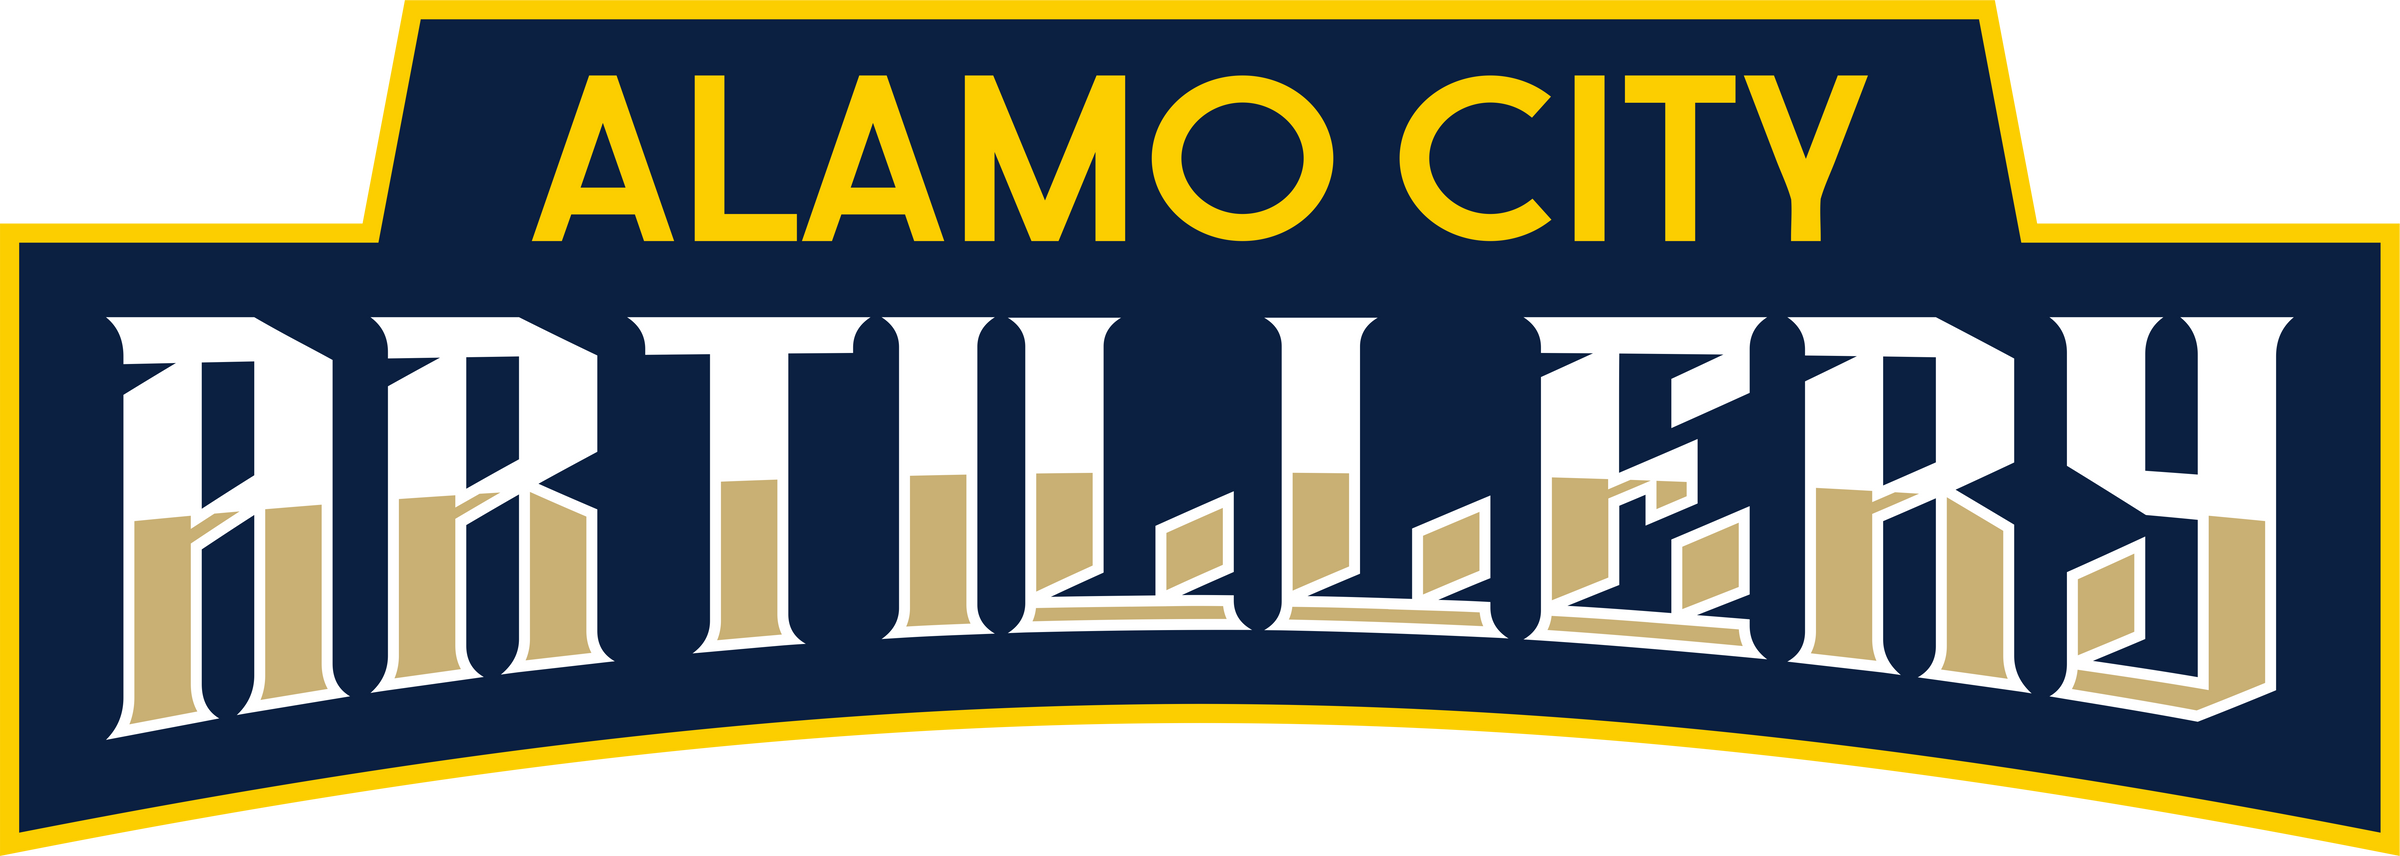 Alamo City Artillery